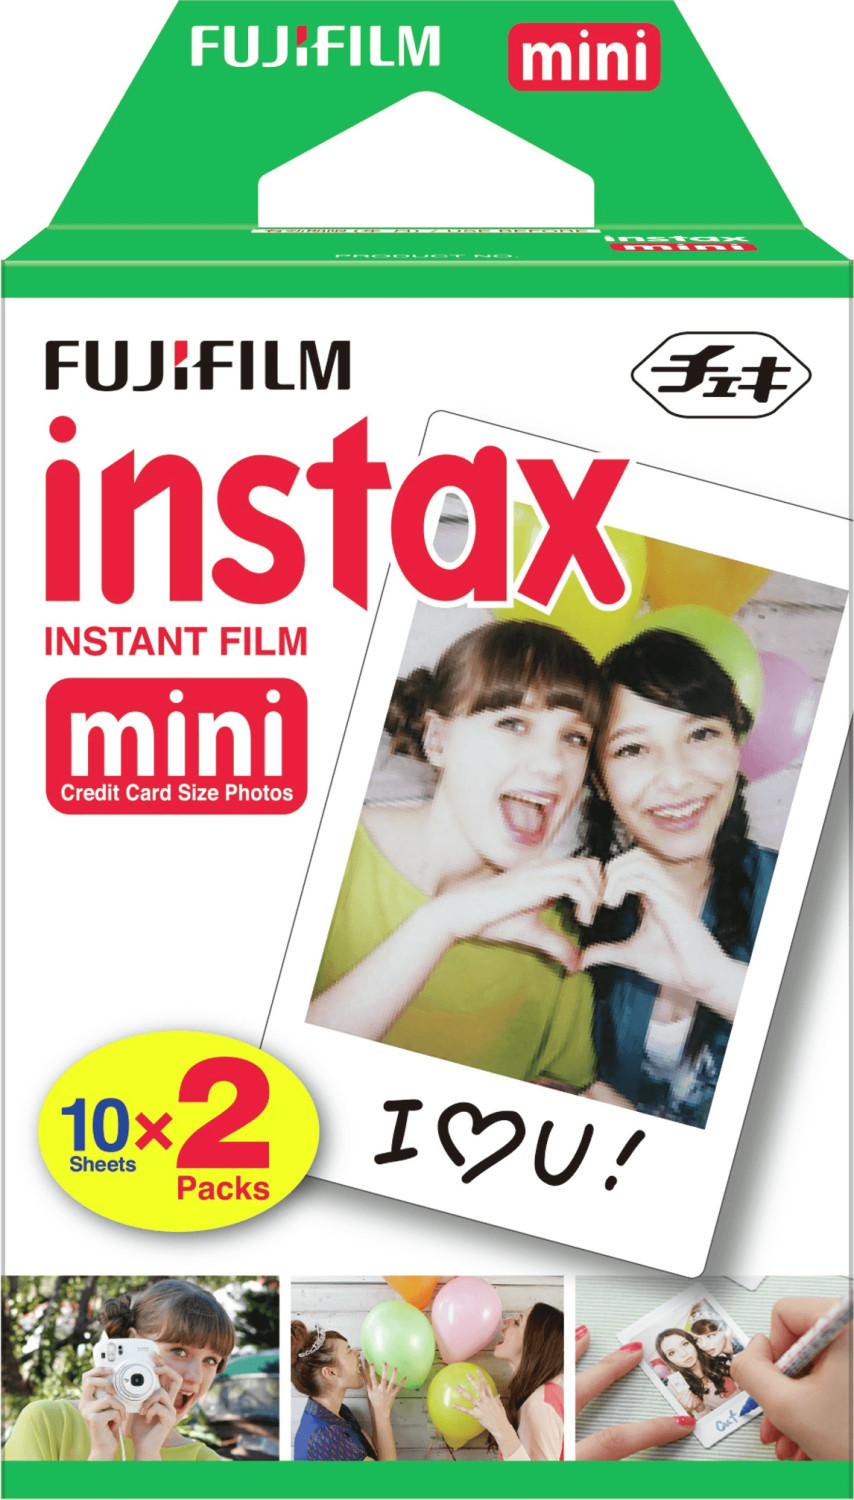 Fujifilm INSTAX Mini 7 with 10-pack Film, Light Pink UK